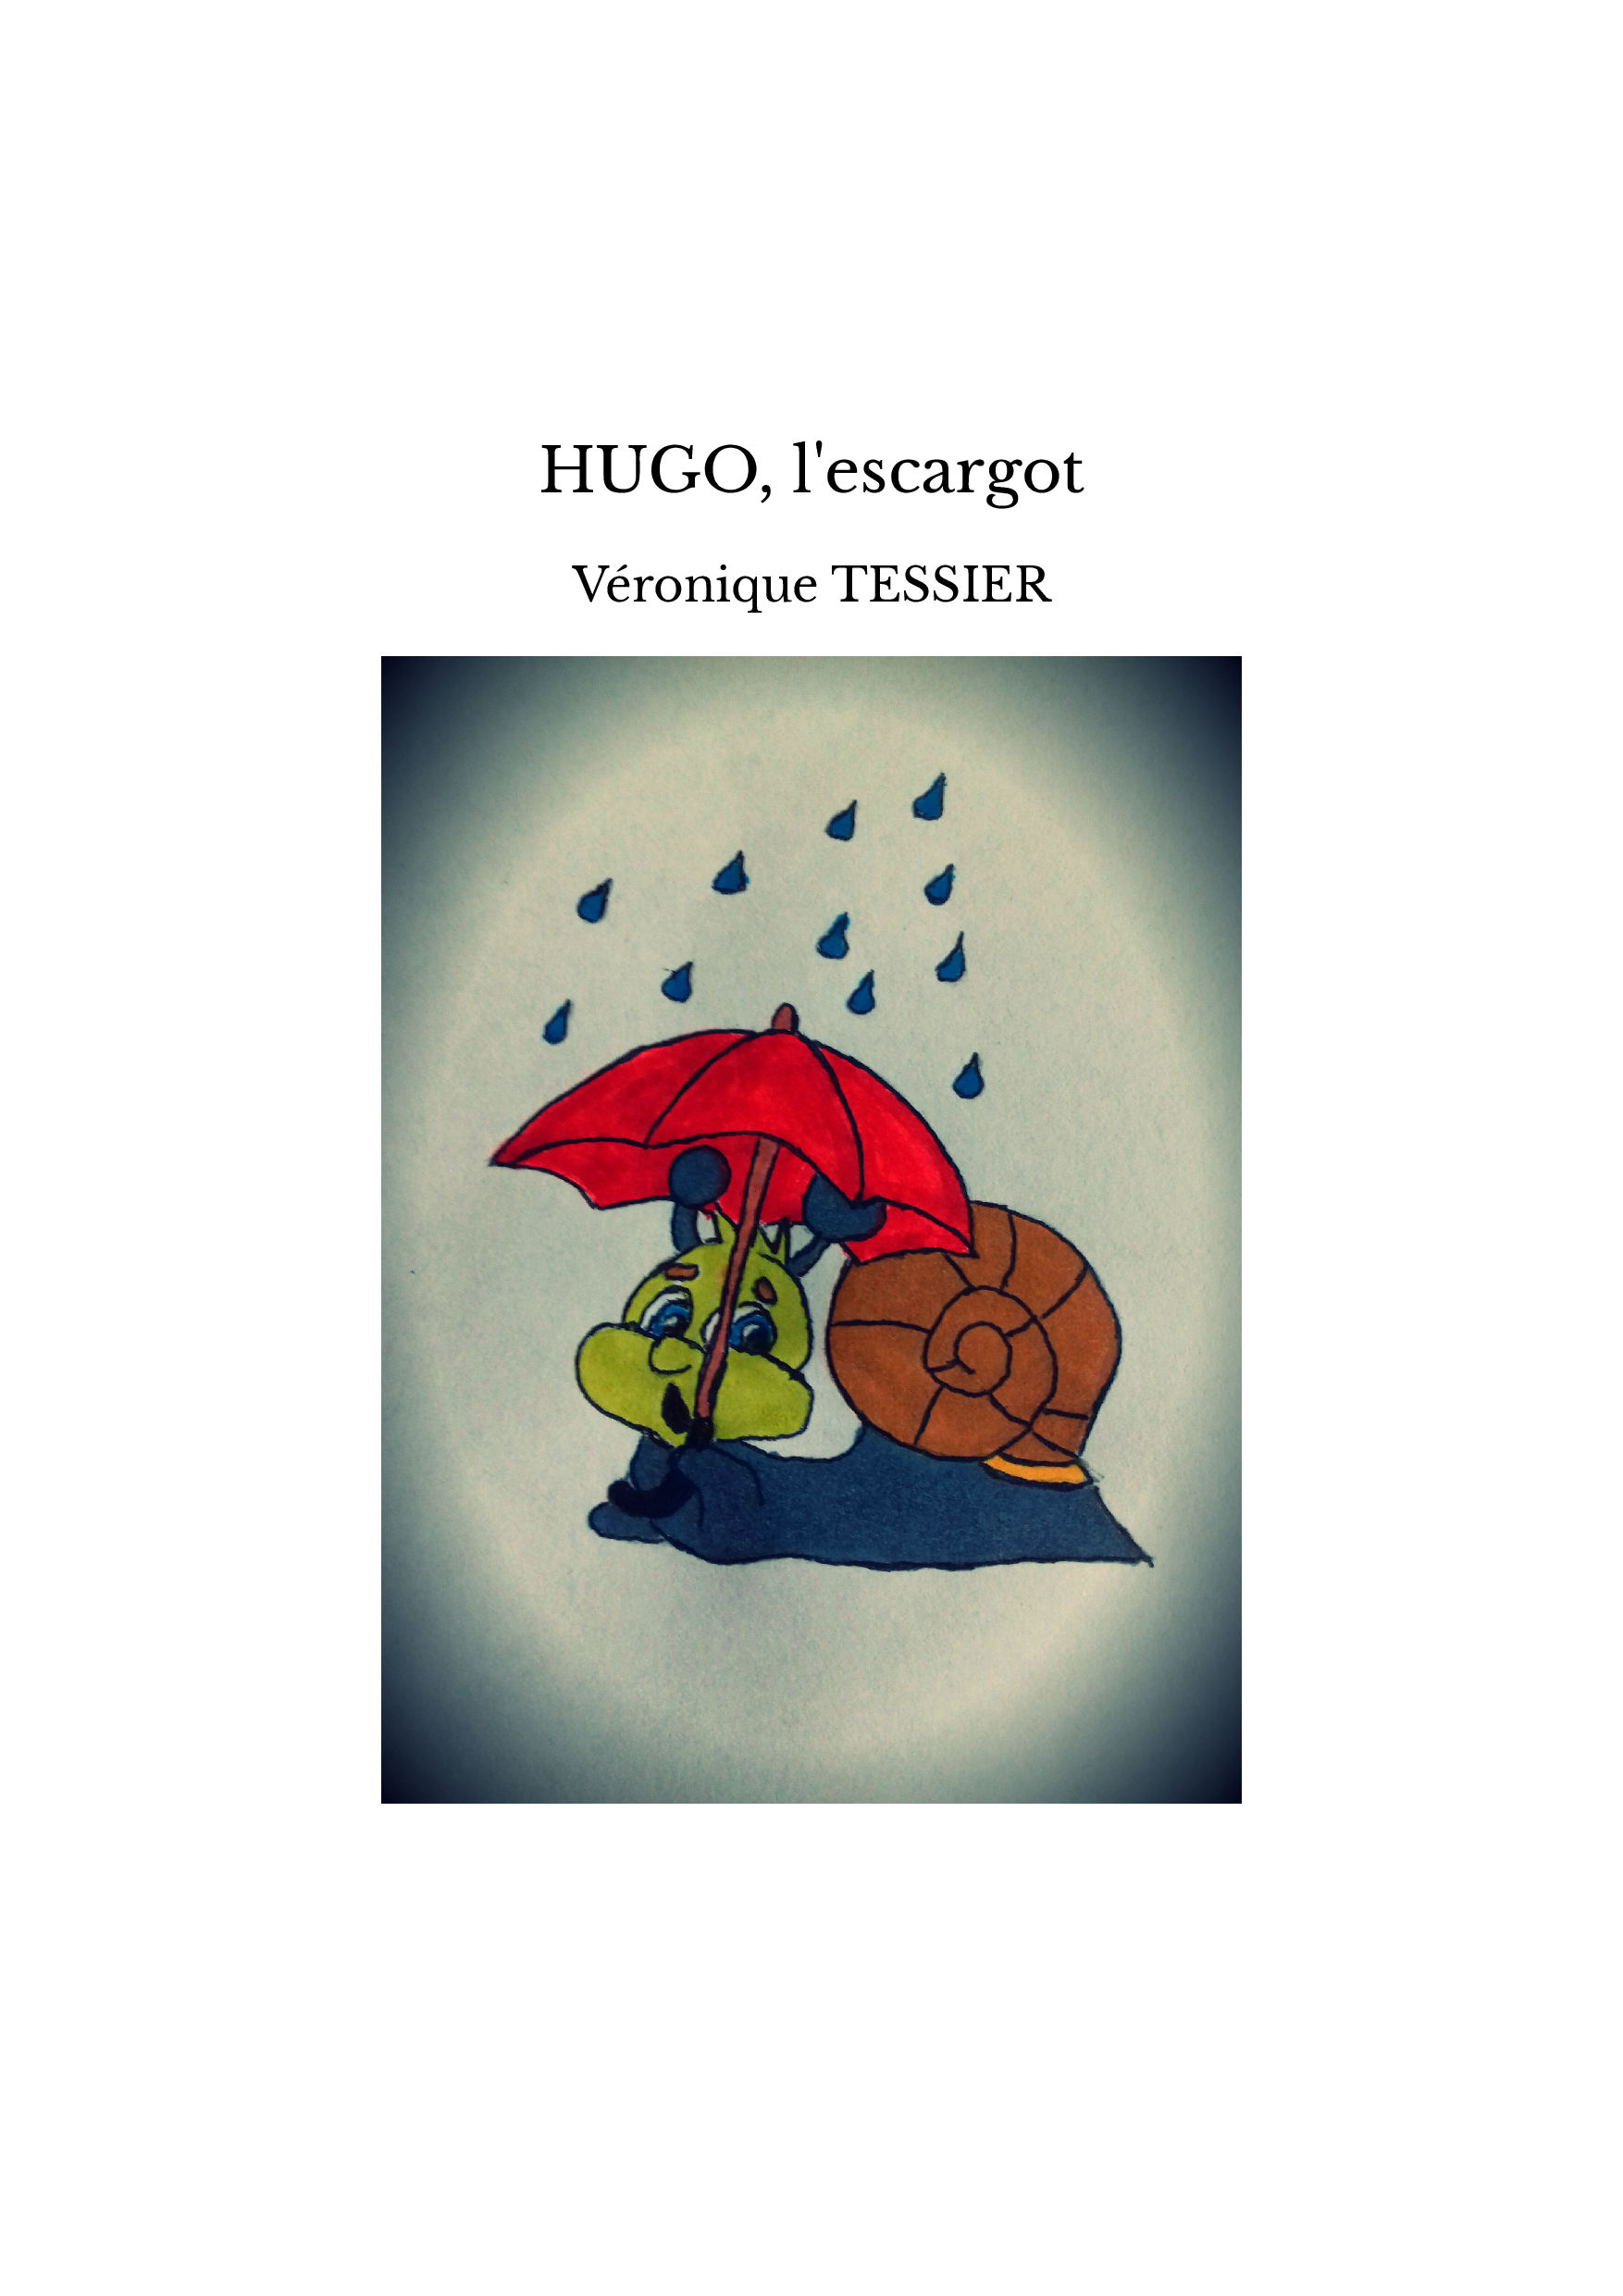 Hugo L Escargot HUGO, l'escargot - Veronimo